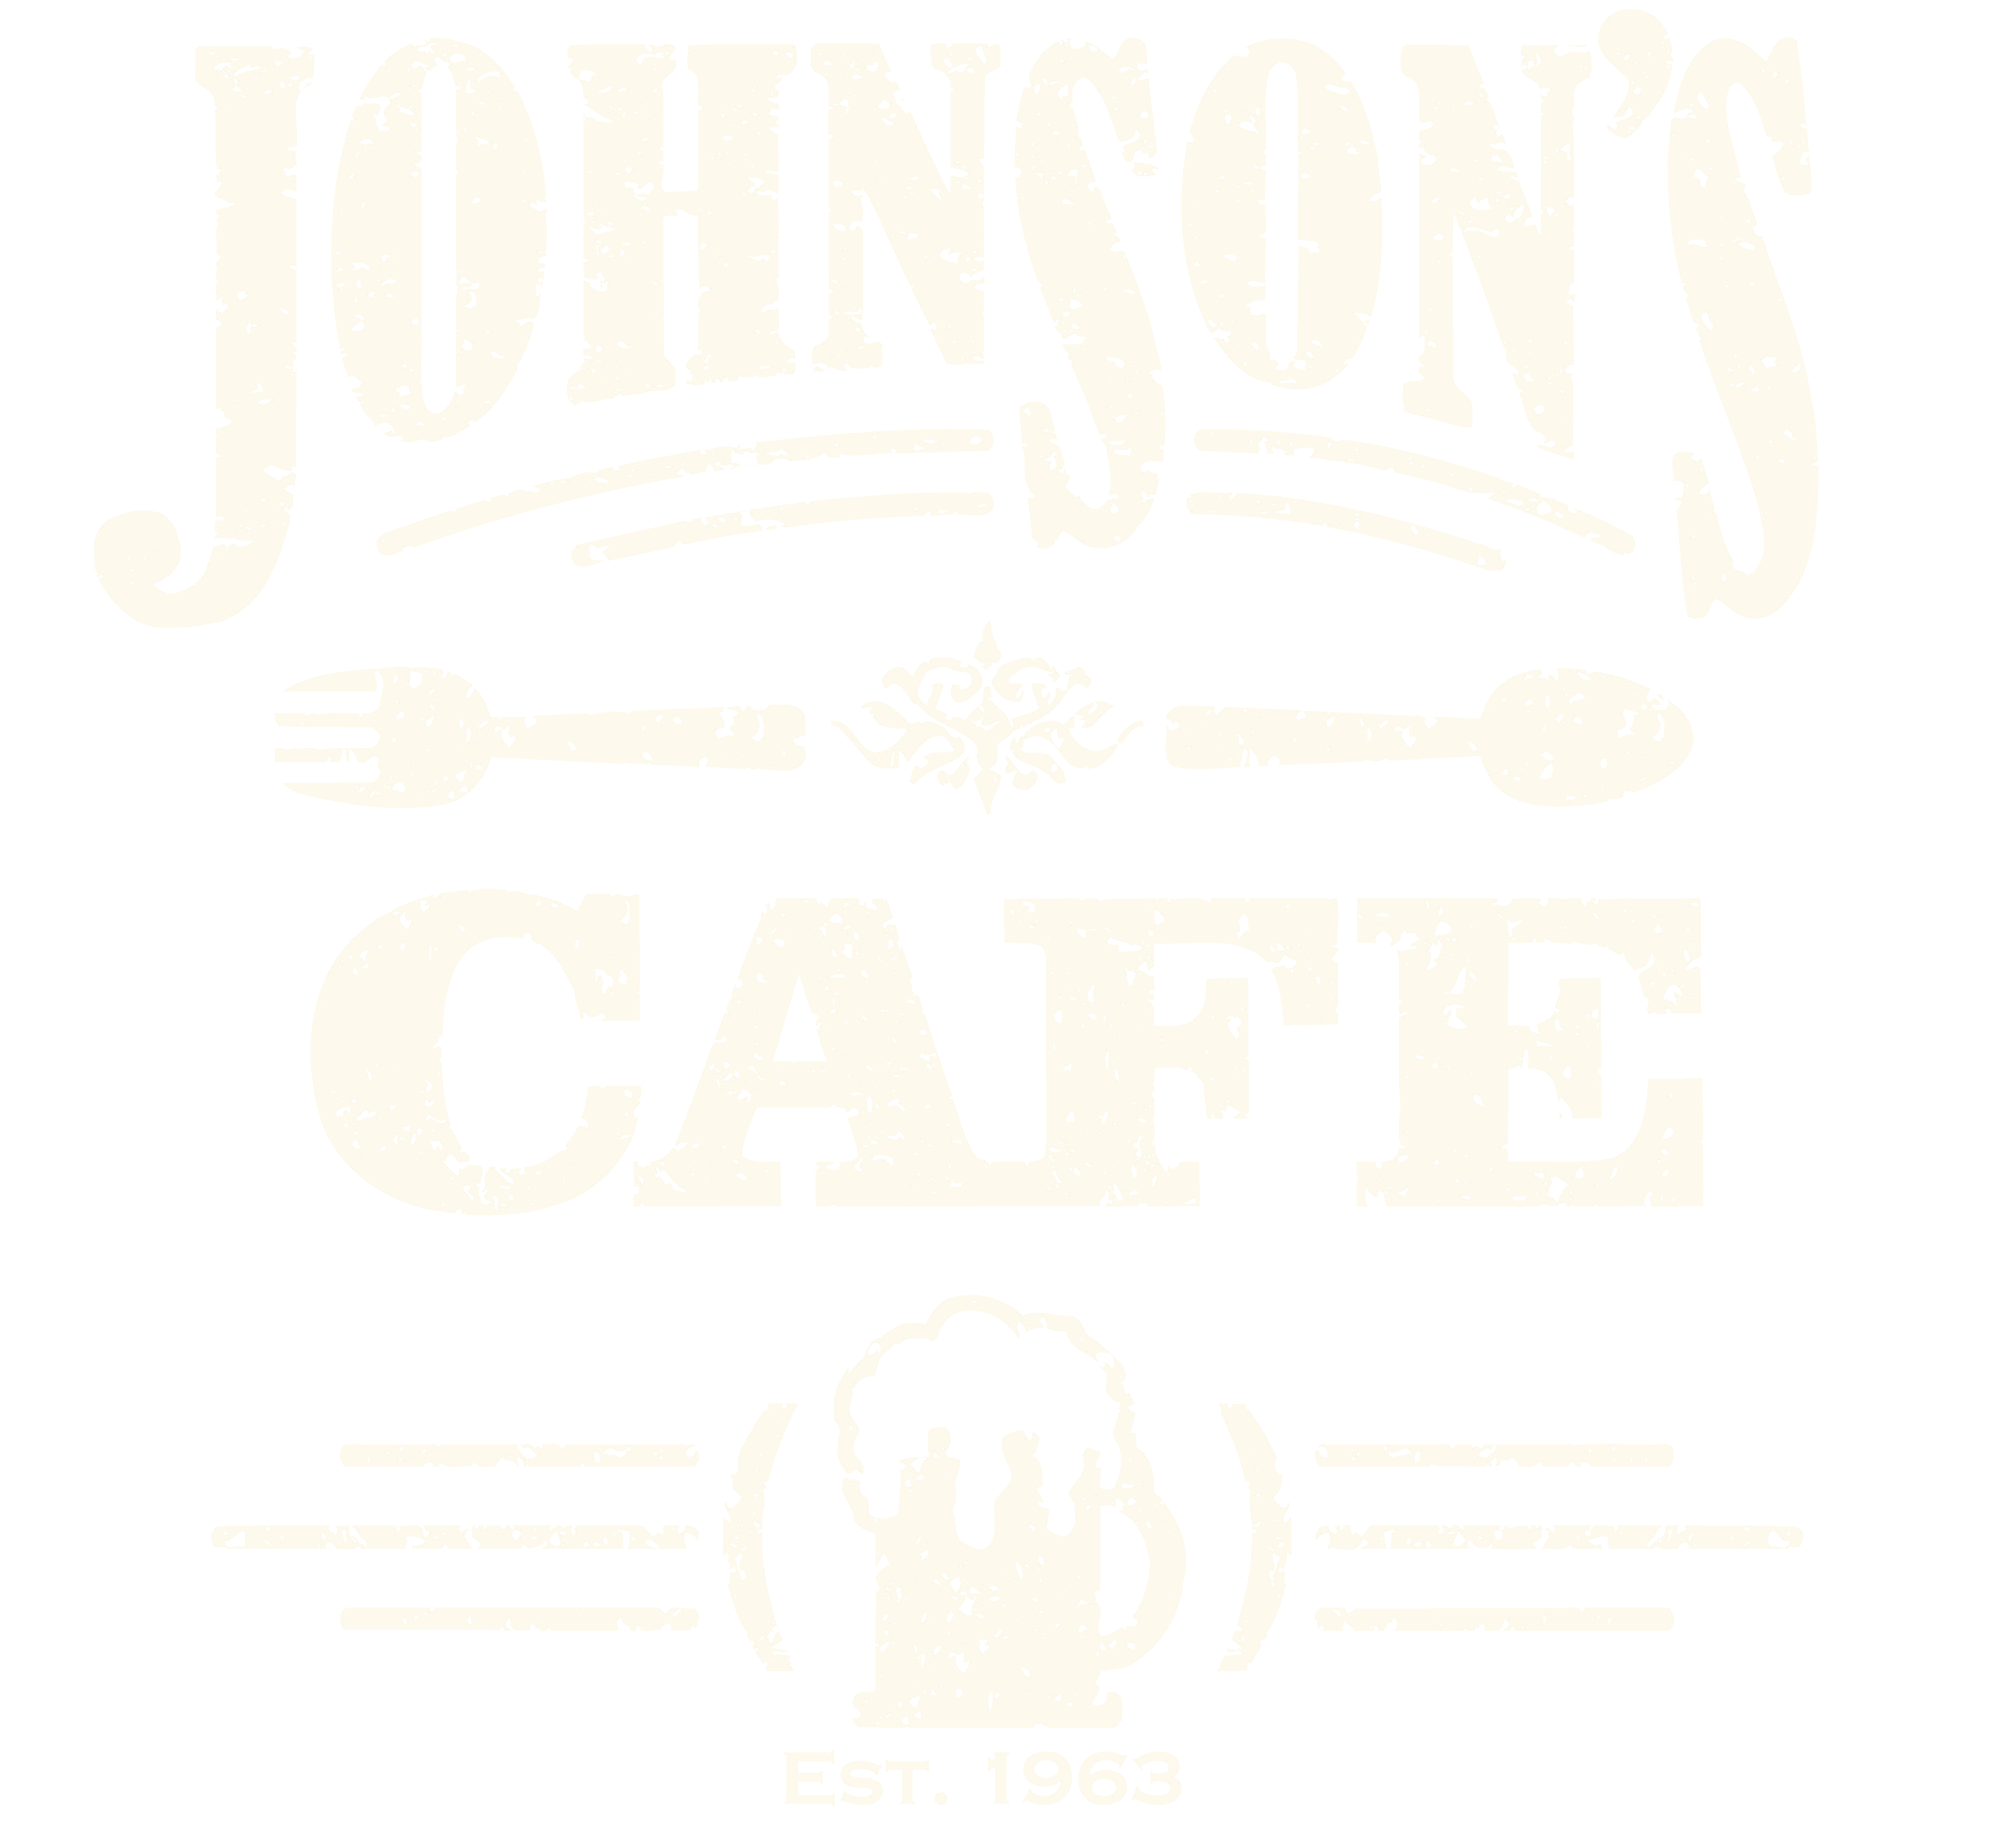 Johnson's Cafe Home